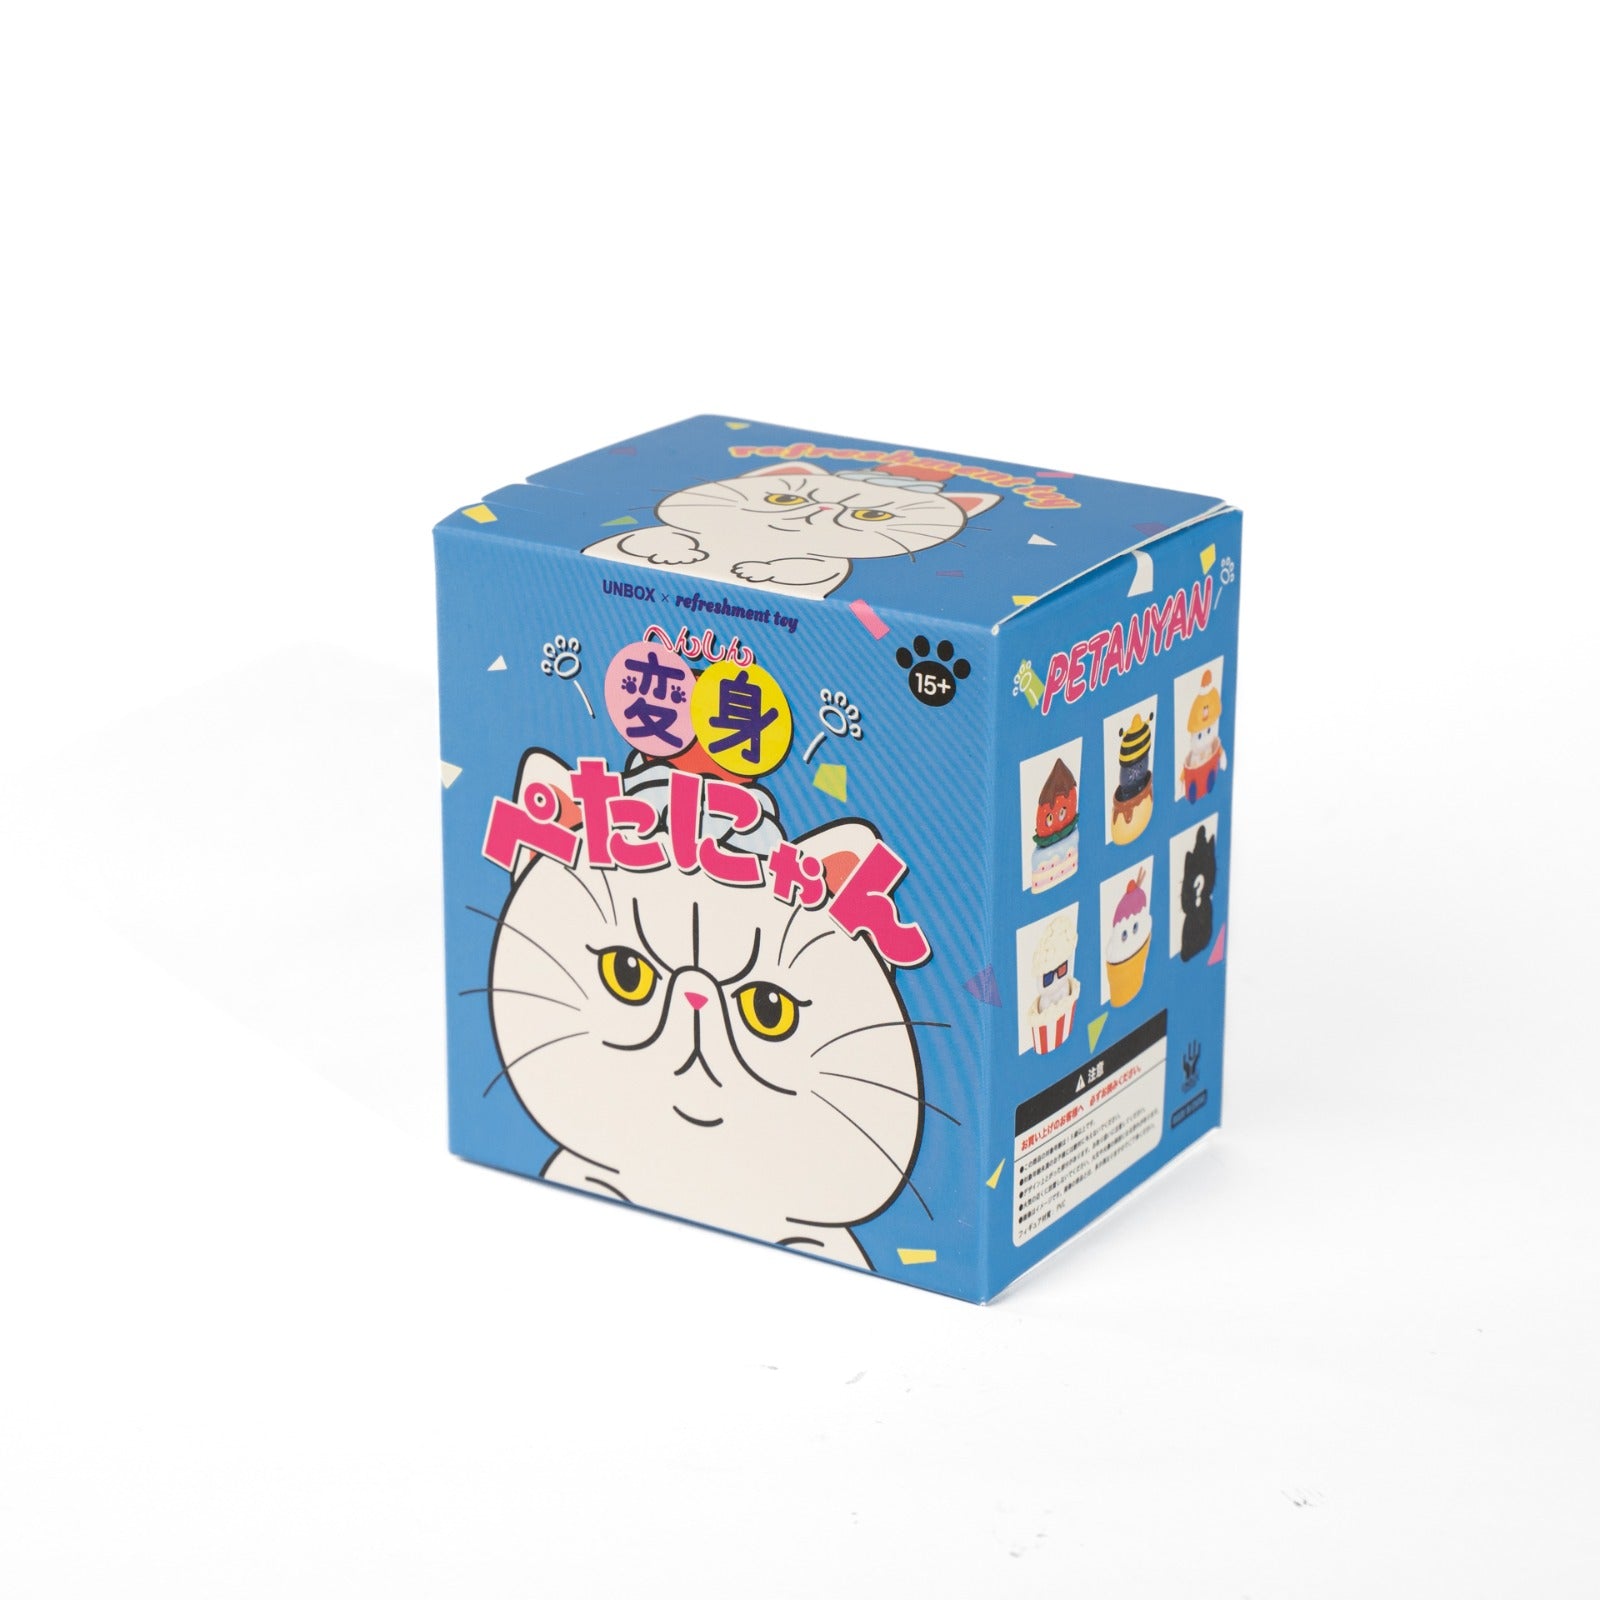 Refreshment Toy Blind Box Series by Henshin Petanyan